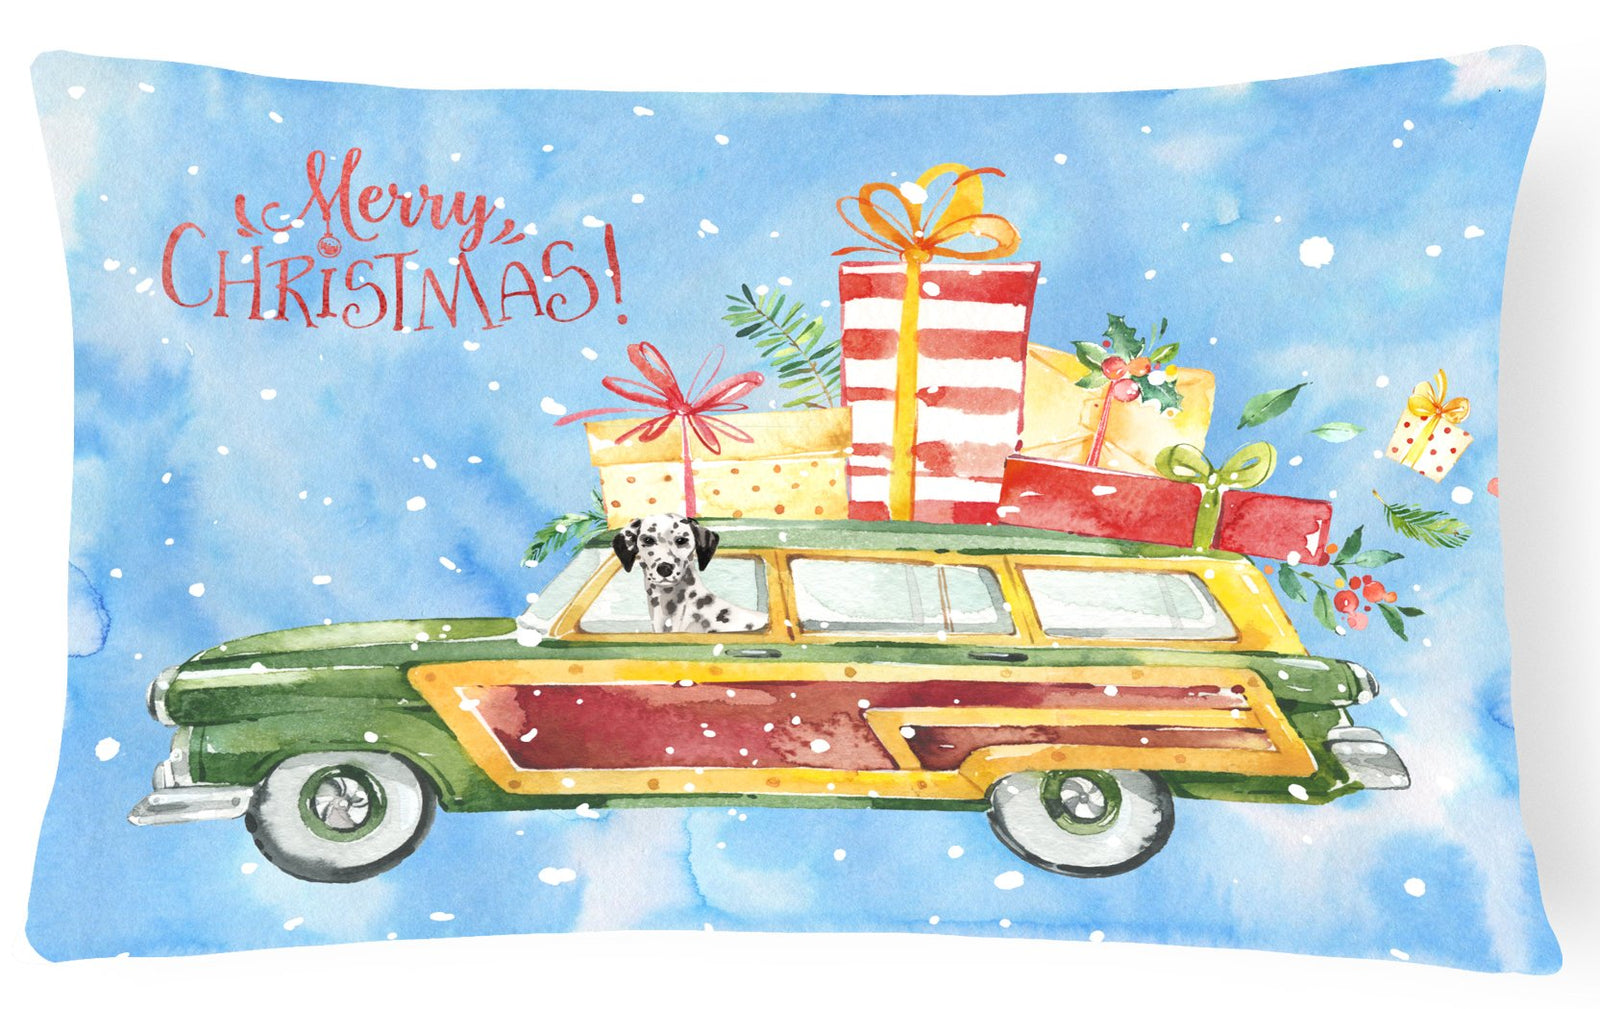 Merry Christmas Dalmatian Canvas Fabric Decorative Pillow CK2452PW1216 by Caroline's Treasures